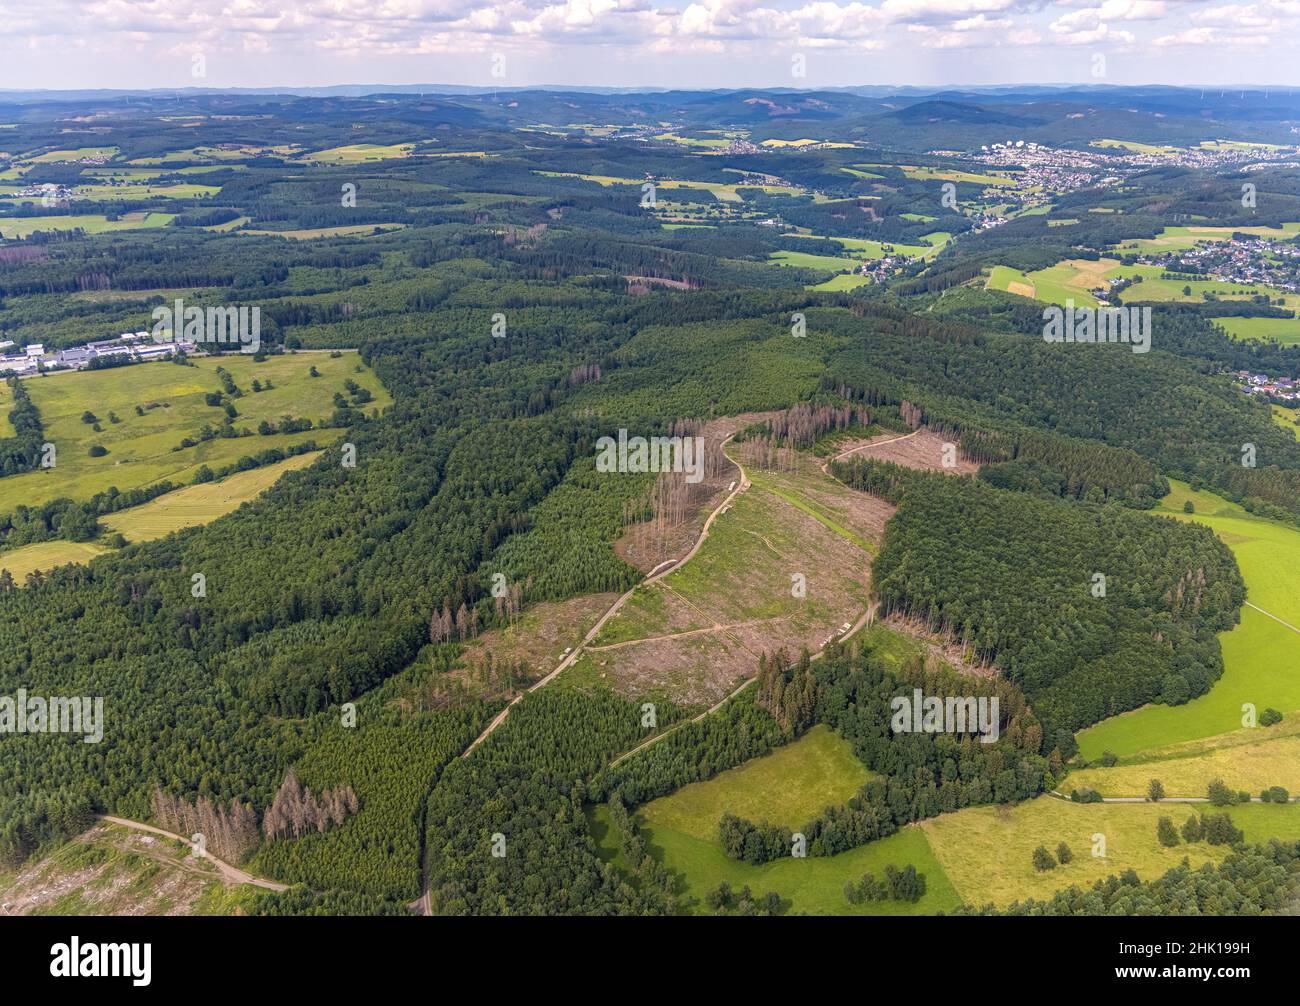 Aerial photograph, forest area with forest damage, Hünsborn, Wenden, Sauerland, North Rhine-Westphalia, Germany, tree mortality, bark beetle damage, b Stock Photo